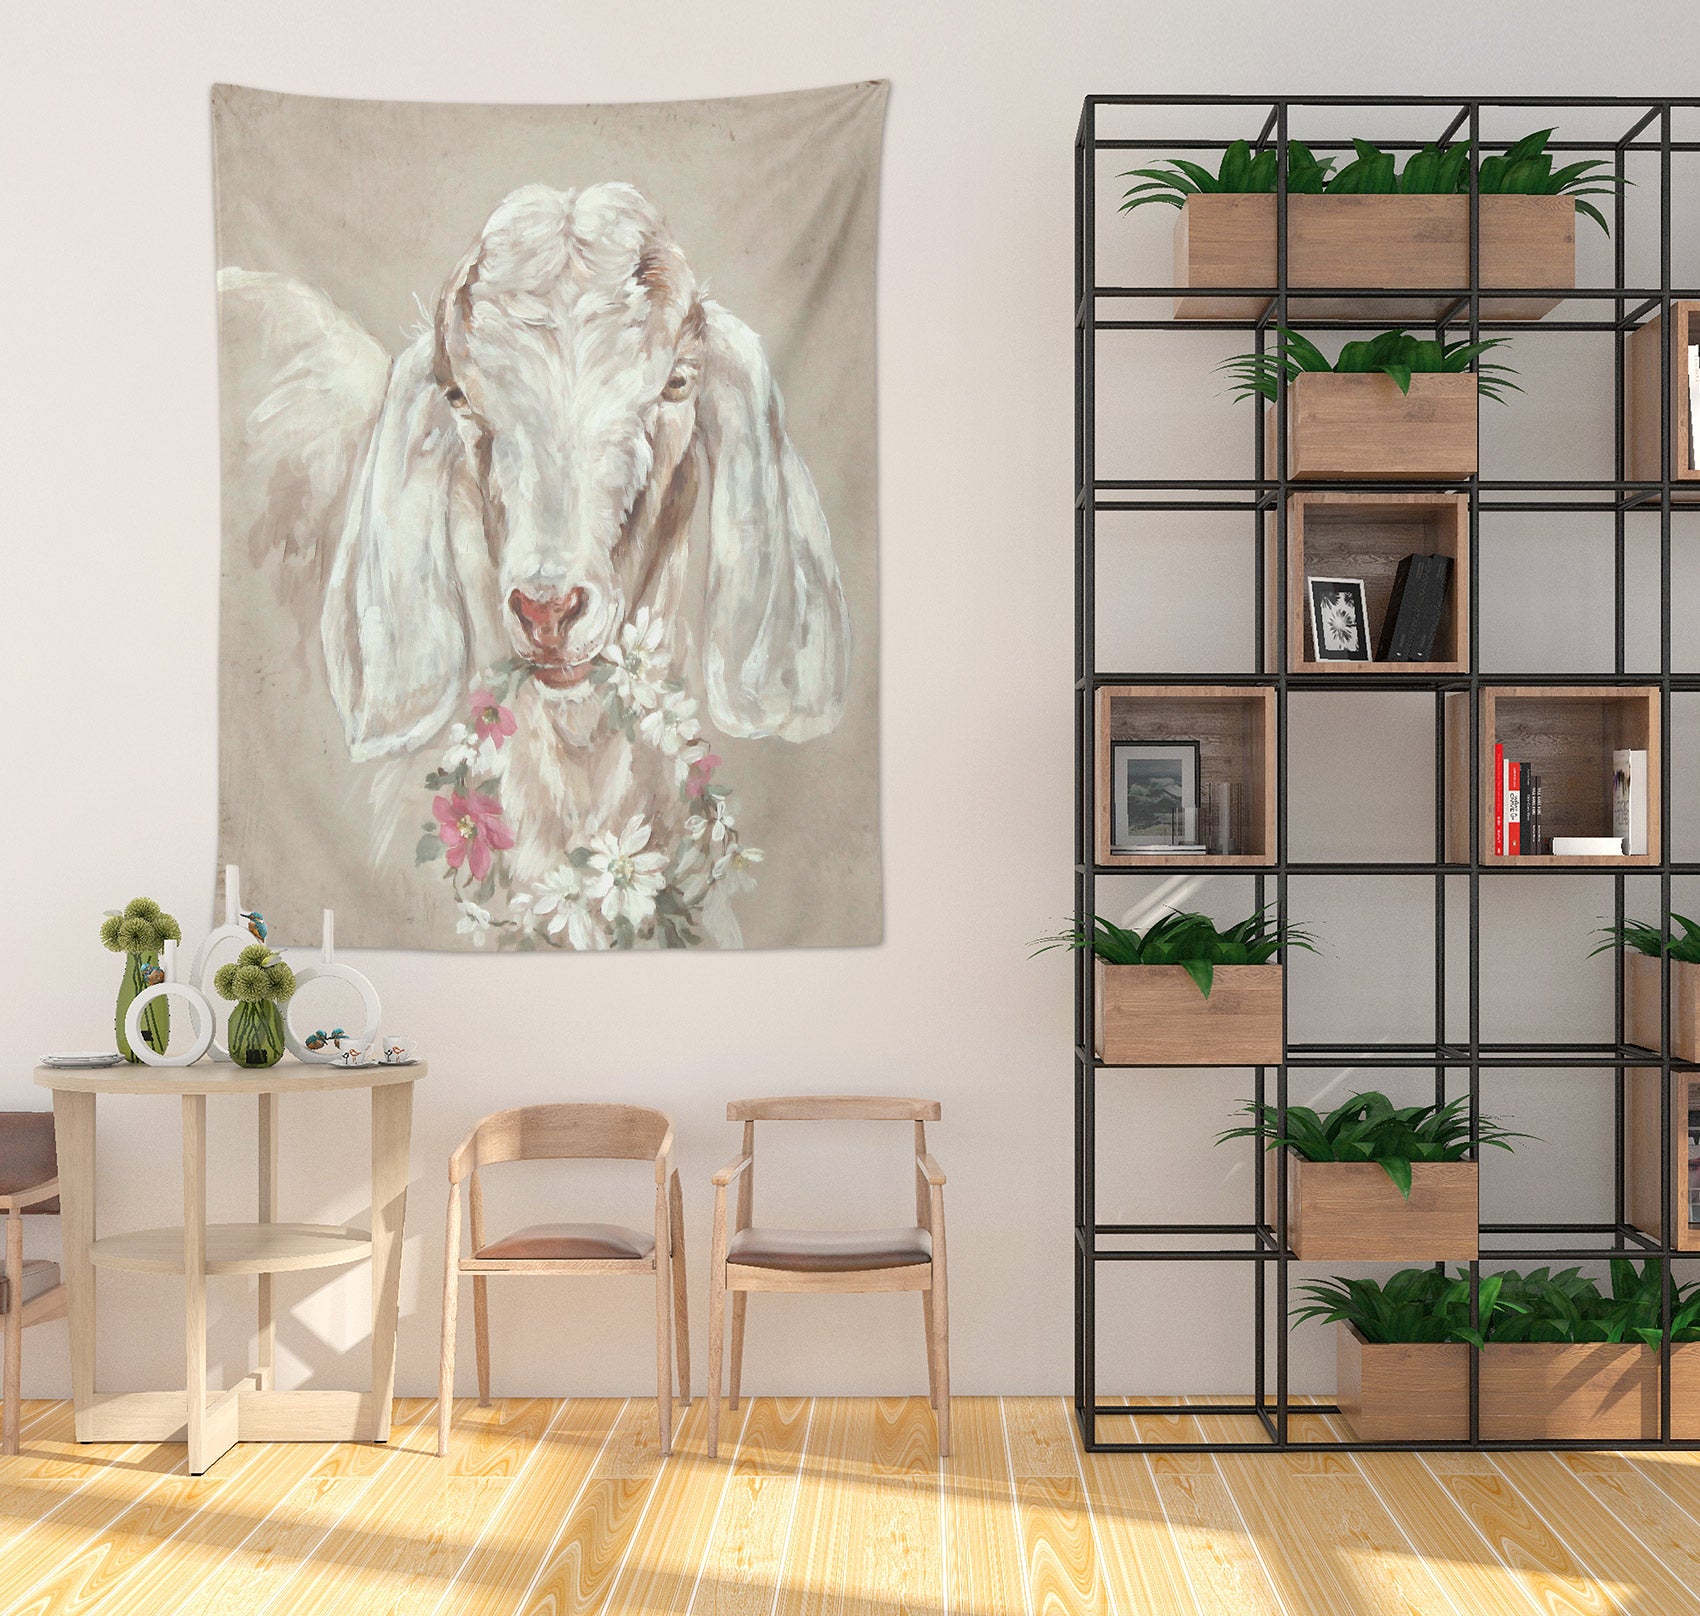 3D Wreath Sheep 111215 Debi Coules Tapestry Hanging Cloth Hang